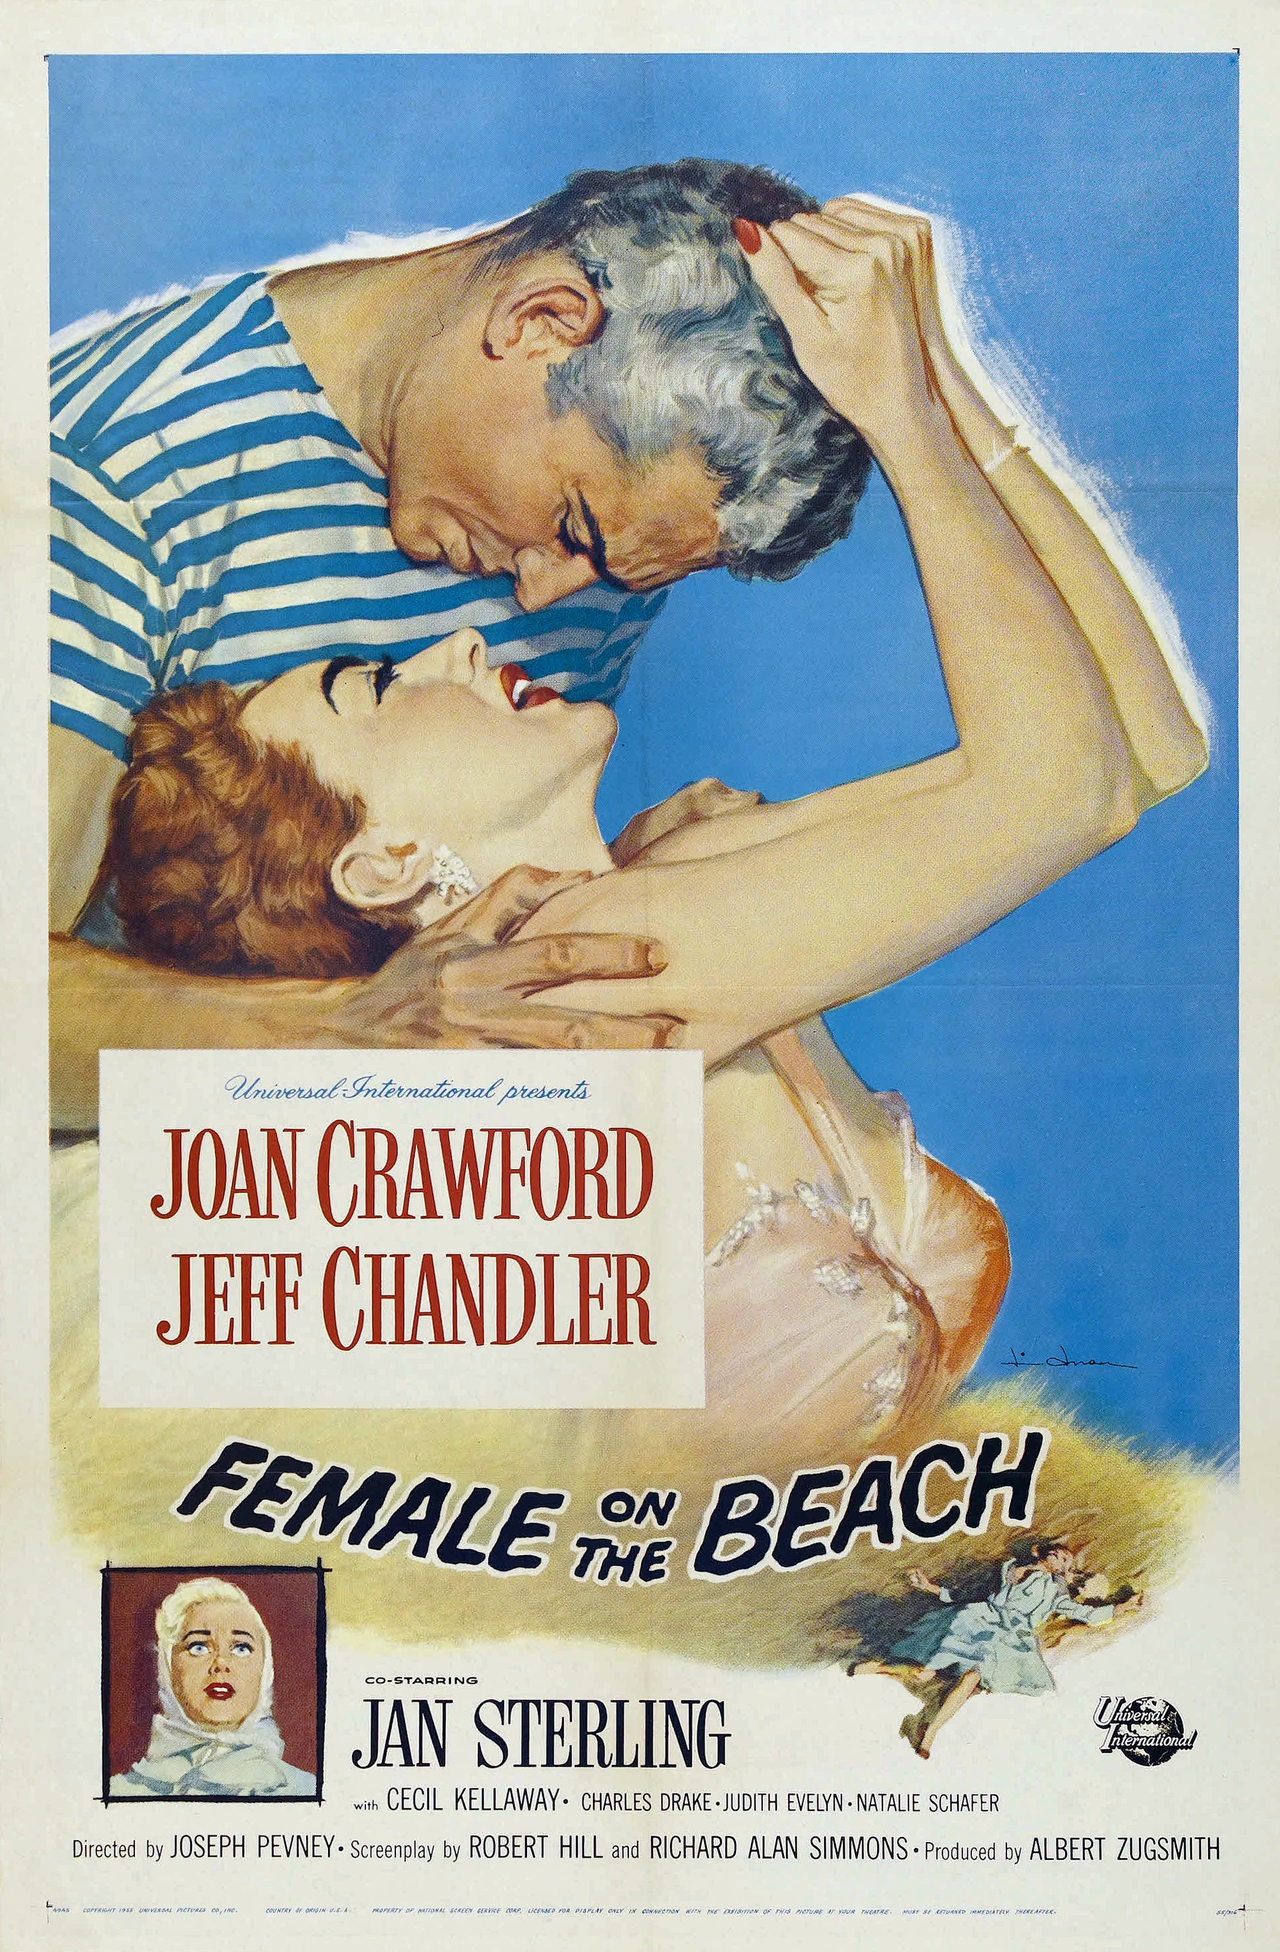 Jeff Chandler در صحنه فیلم سینمایی Female on the Beach به همراه Joan Crawford و Jan Sterling